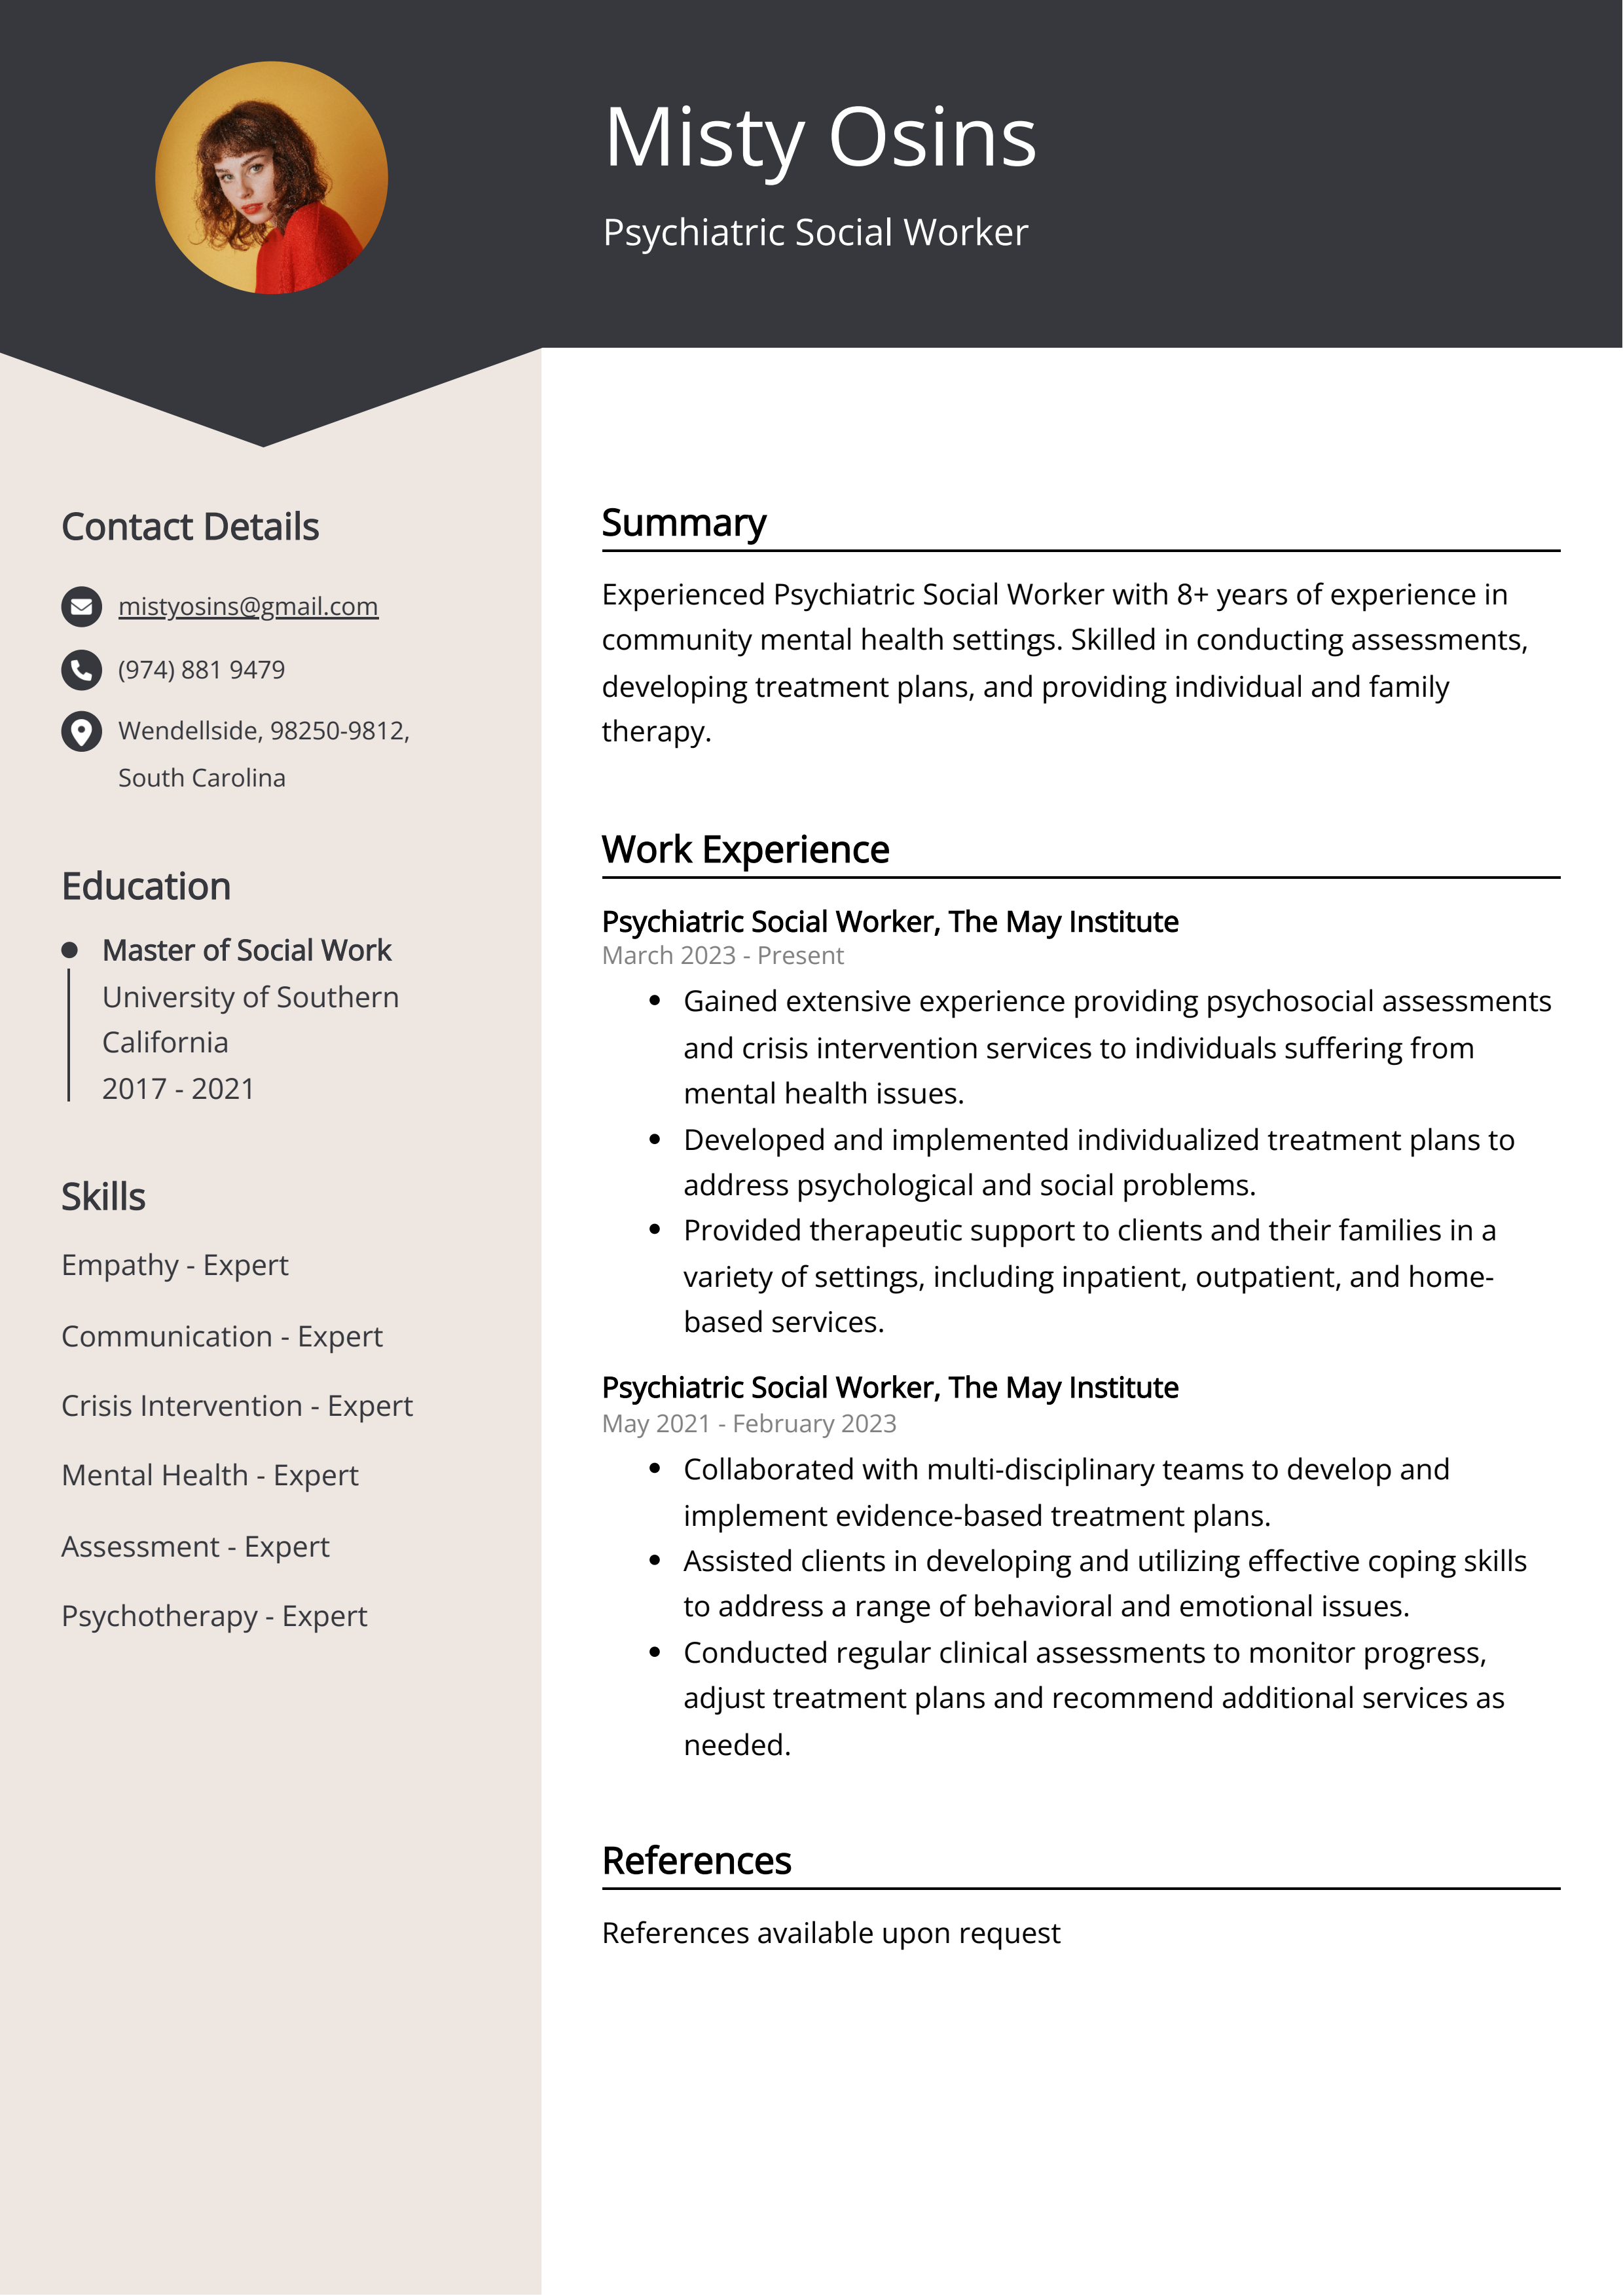 Psychiatric Social Worker CV Example